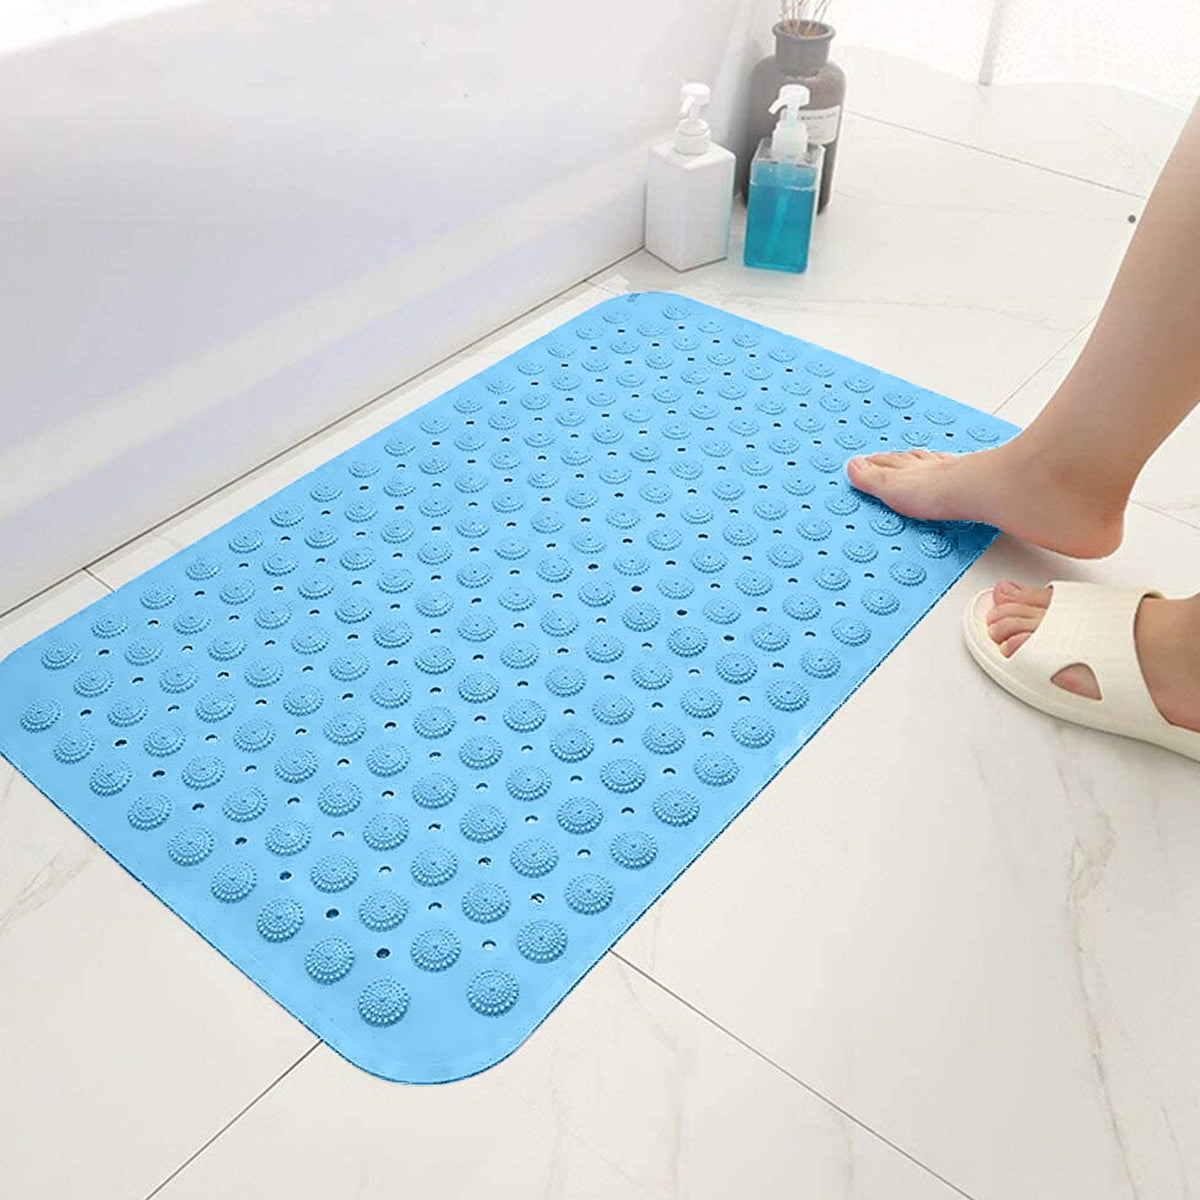 PVC Shower Mat Anti-Slip with Massage Acupressure Points, 46x78 cm, Blue